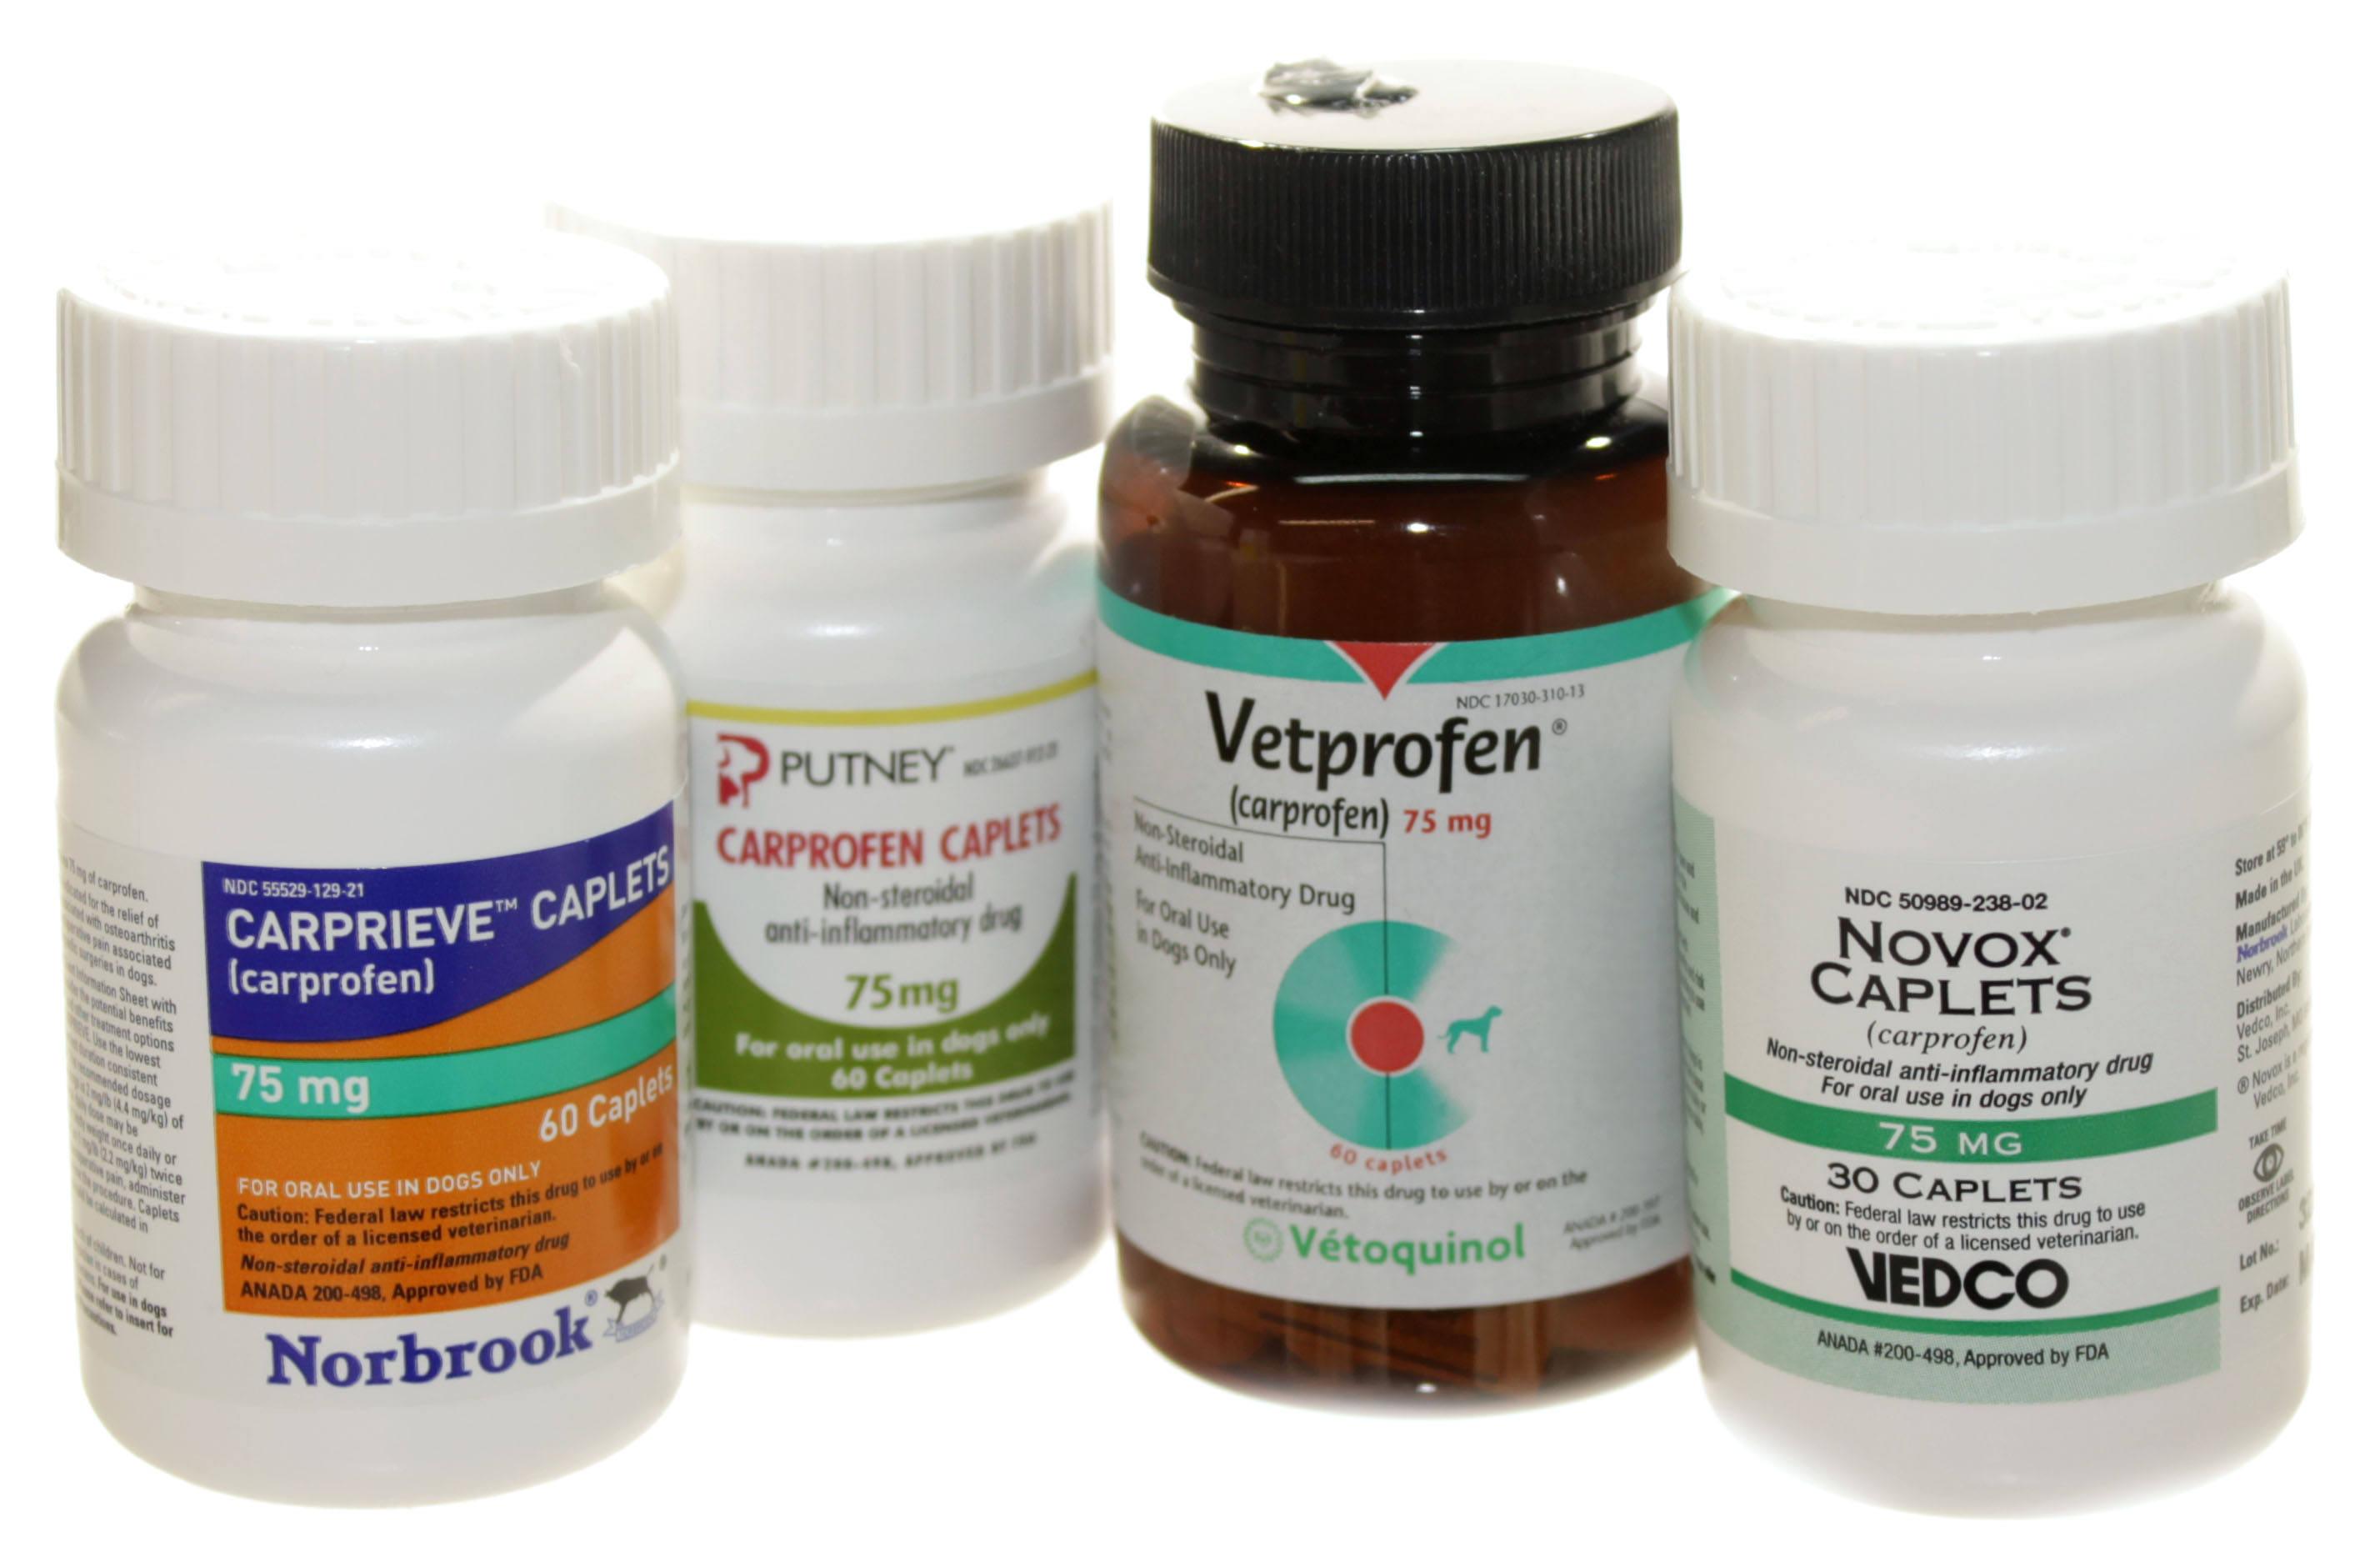 Generic Carprofen for Arthritis in Dogs - VetRxDirect BlogVetRxDirect Blog